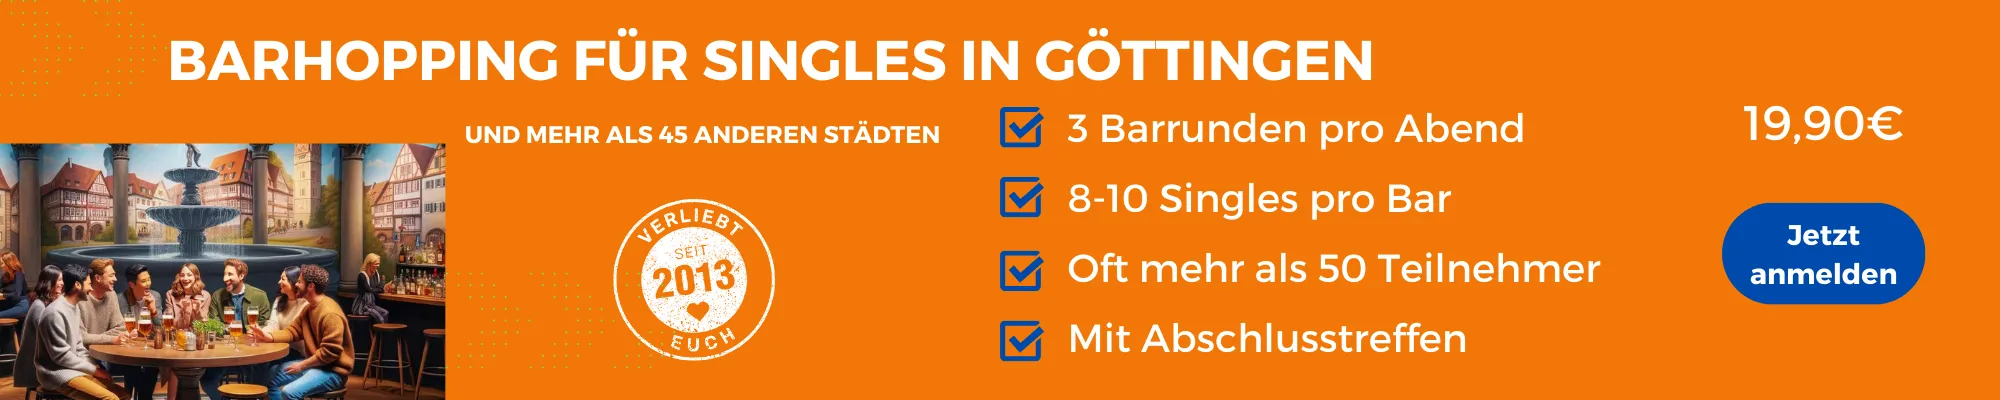 Face to Face Göttingen: Barhopping für Singles in Göttingen